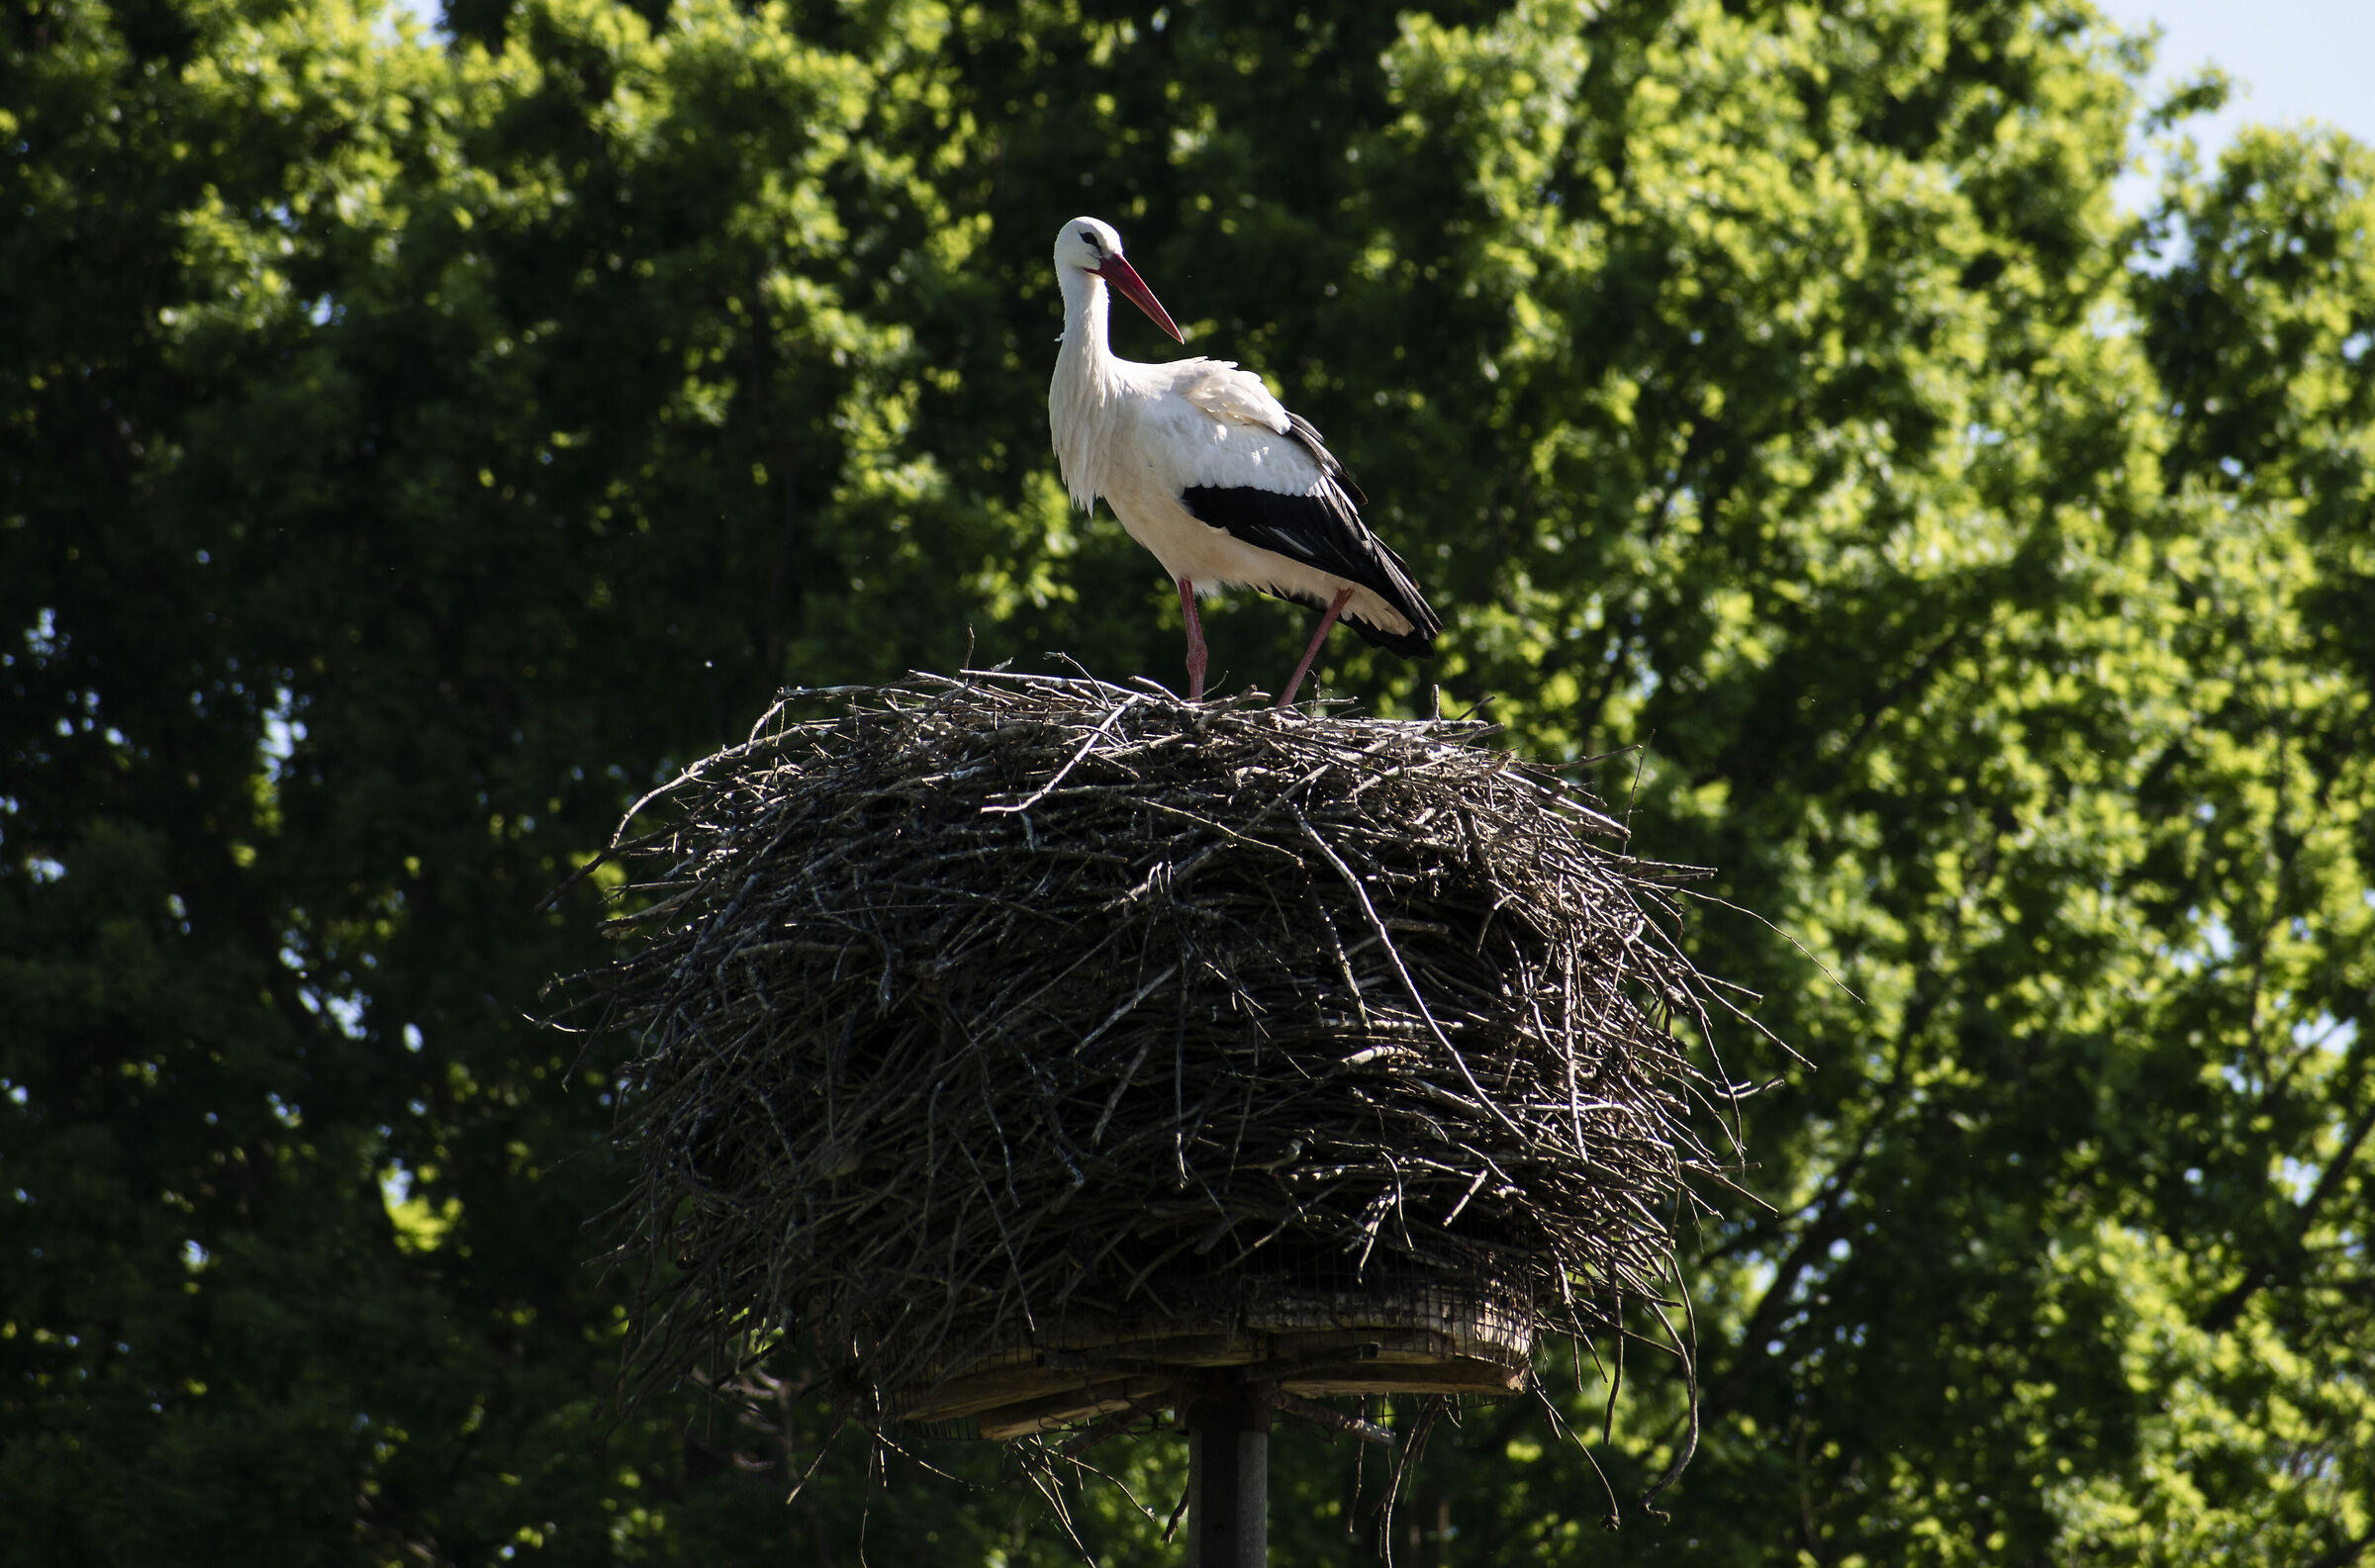 Cicgona on the nest...